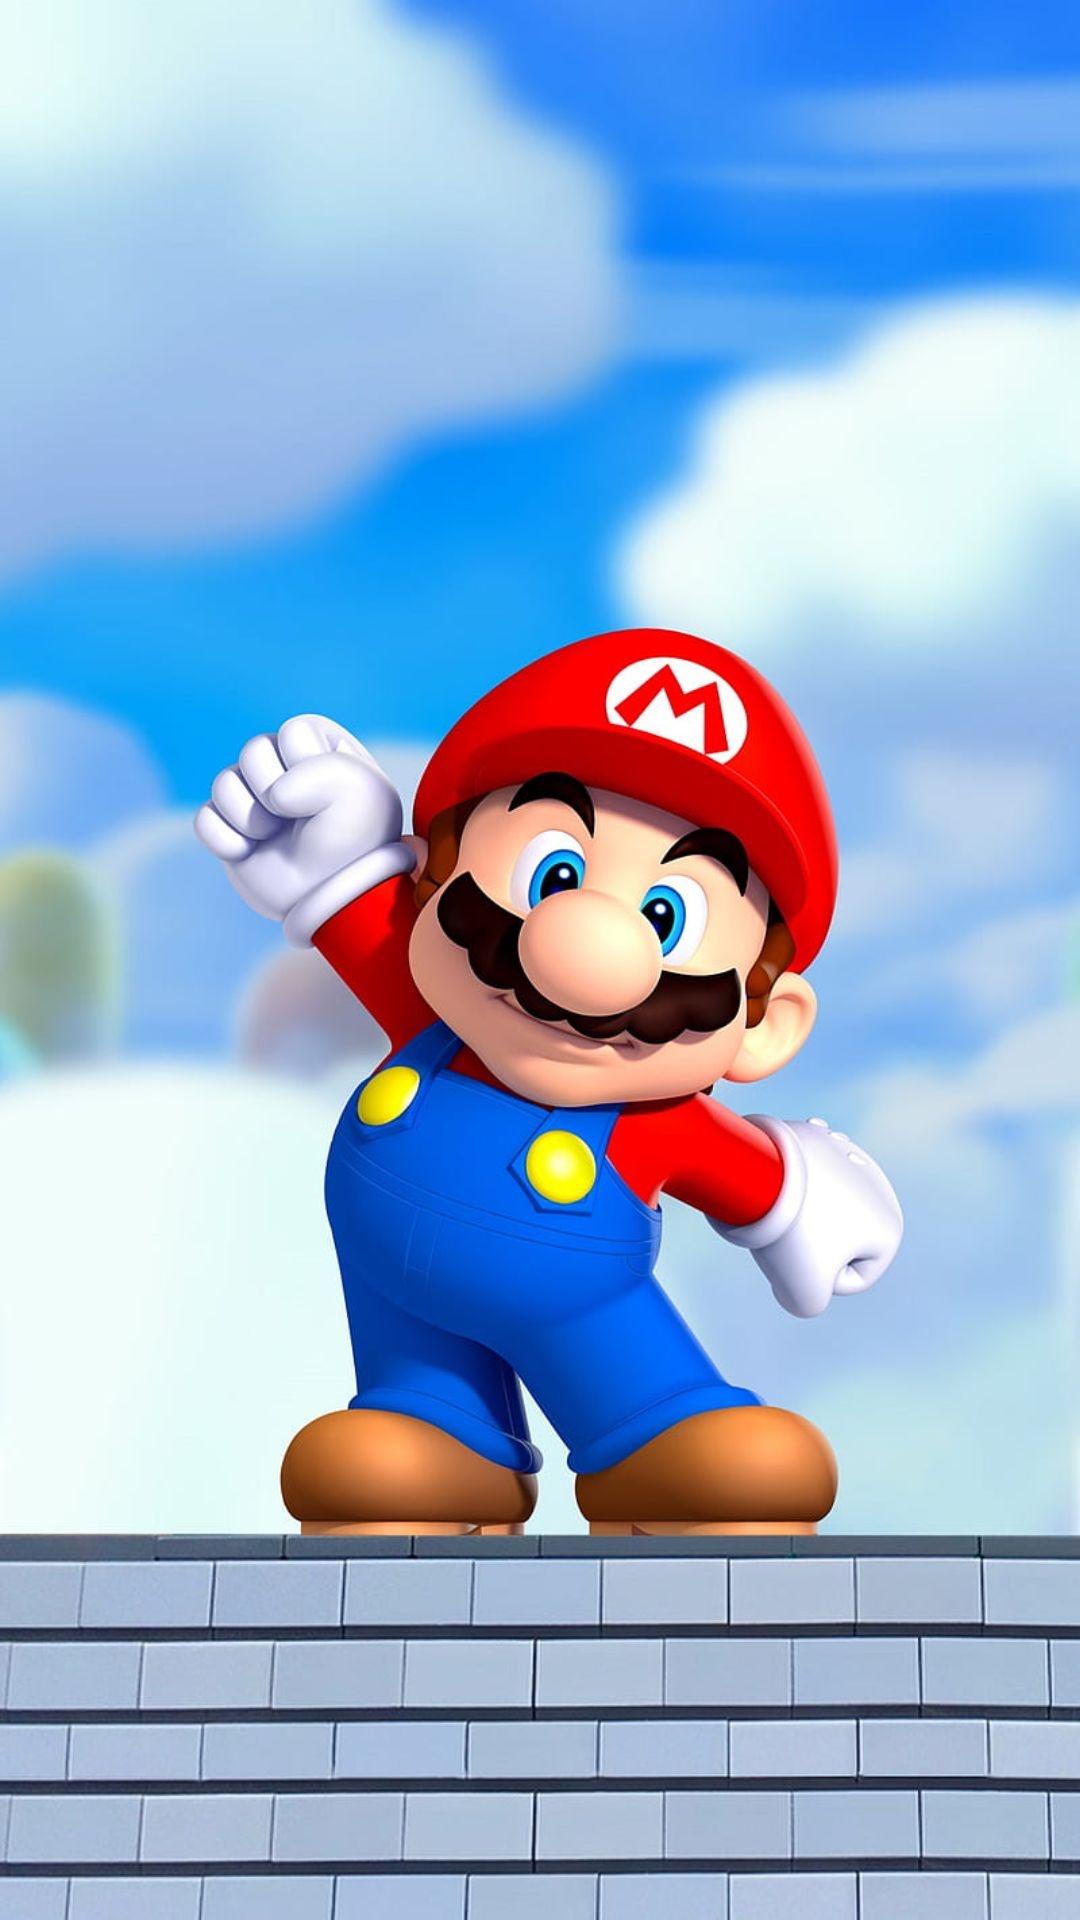 Super Mario wallpapers, Desktop and mobile, Gaming backgrounds, Nintendo art, 1080x1920 Full HD Phone